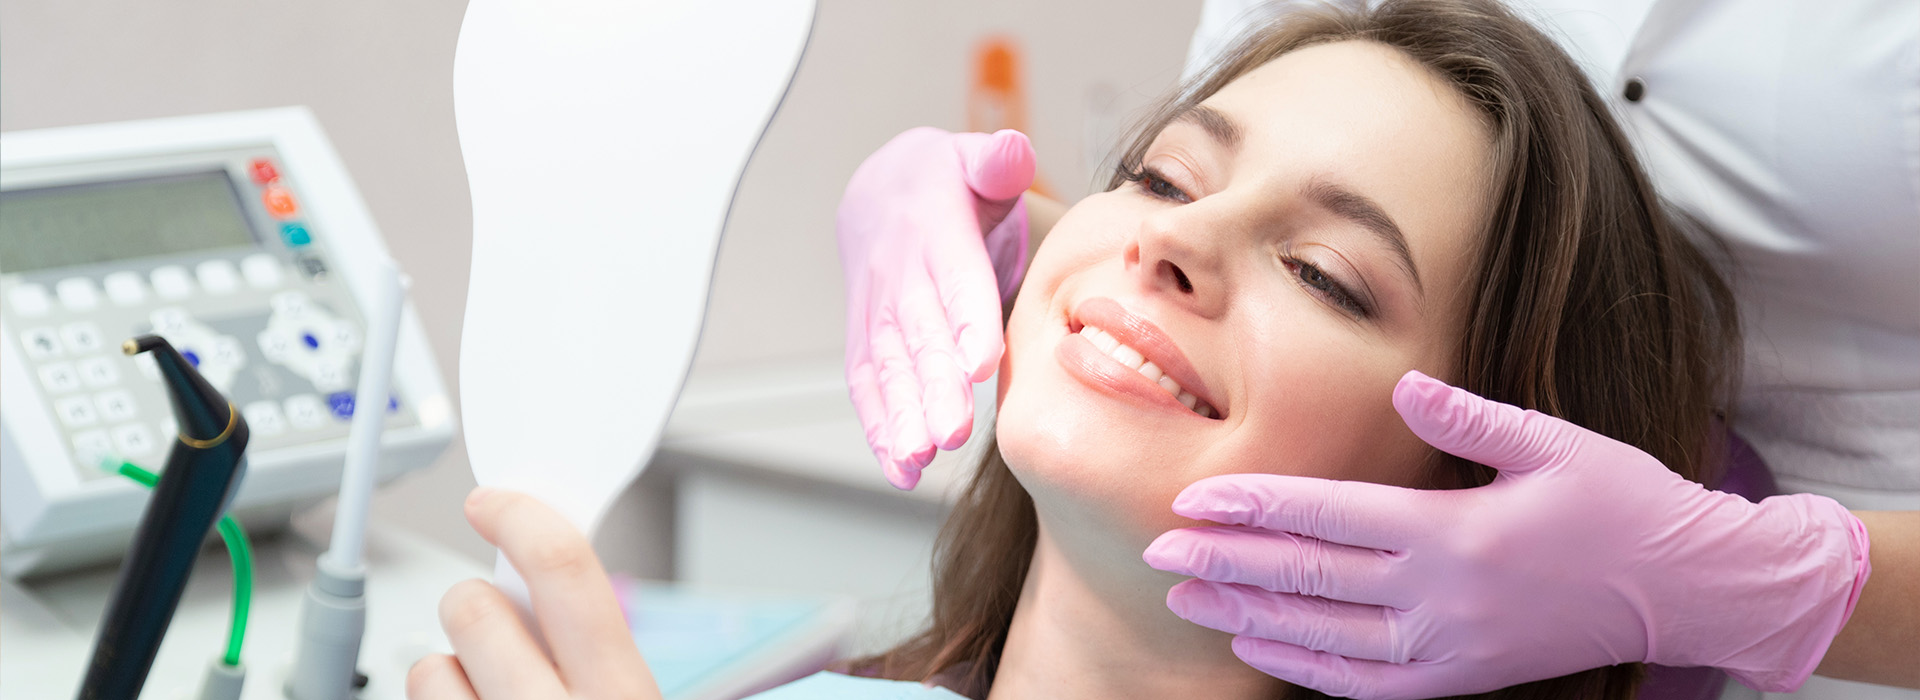 Advanced Dental Care | Inlays  amp  Onlays, Invisalign reg  and Periodontal Treatment